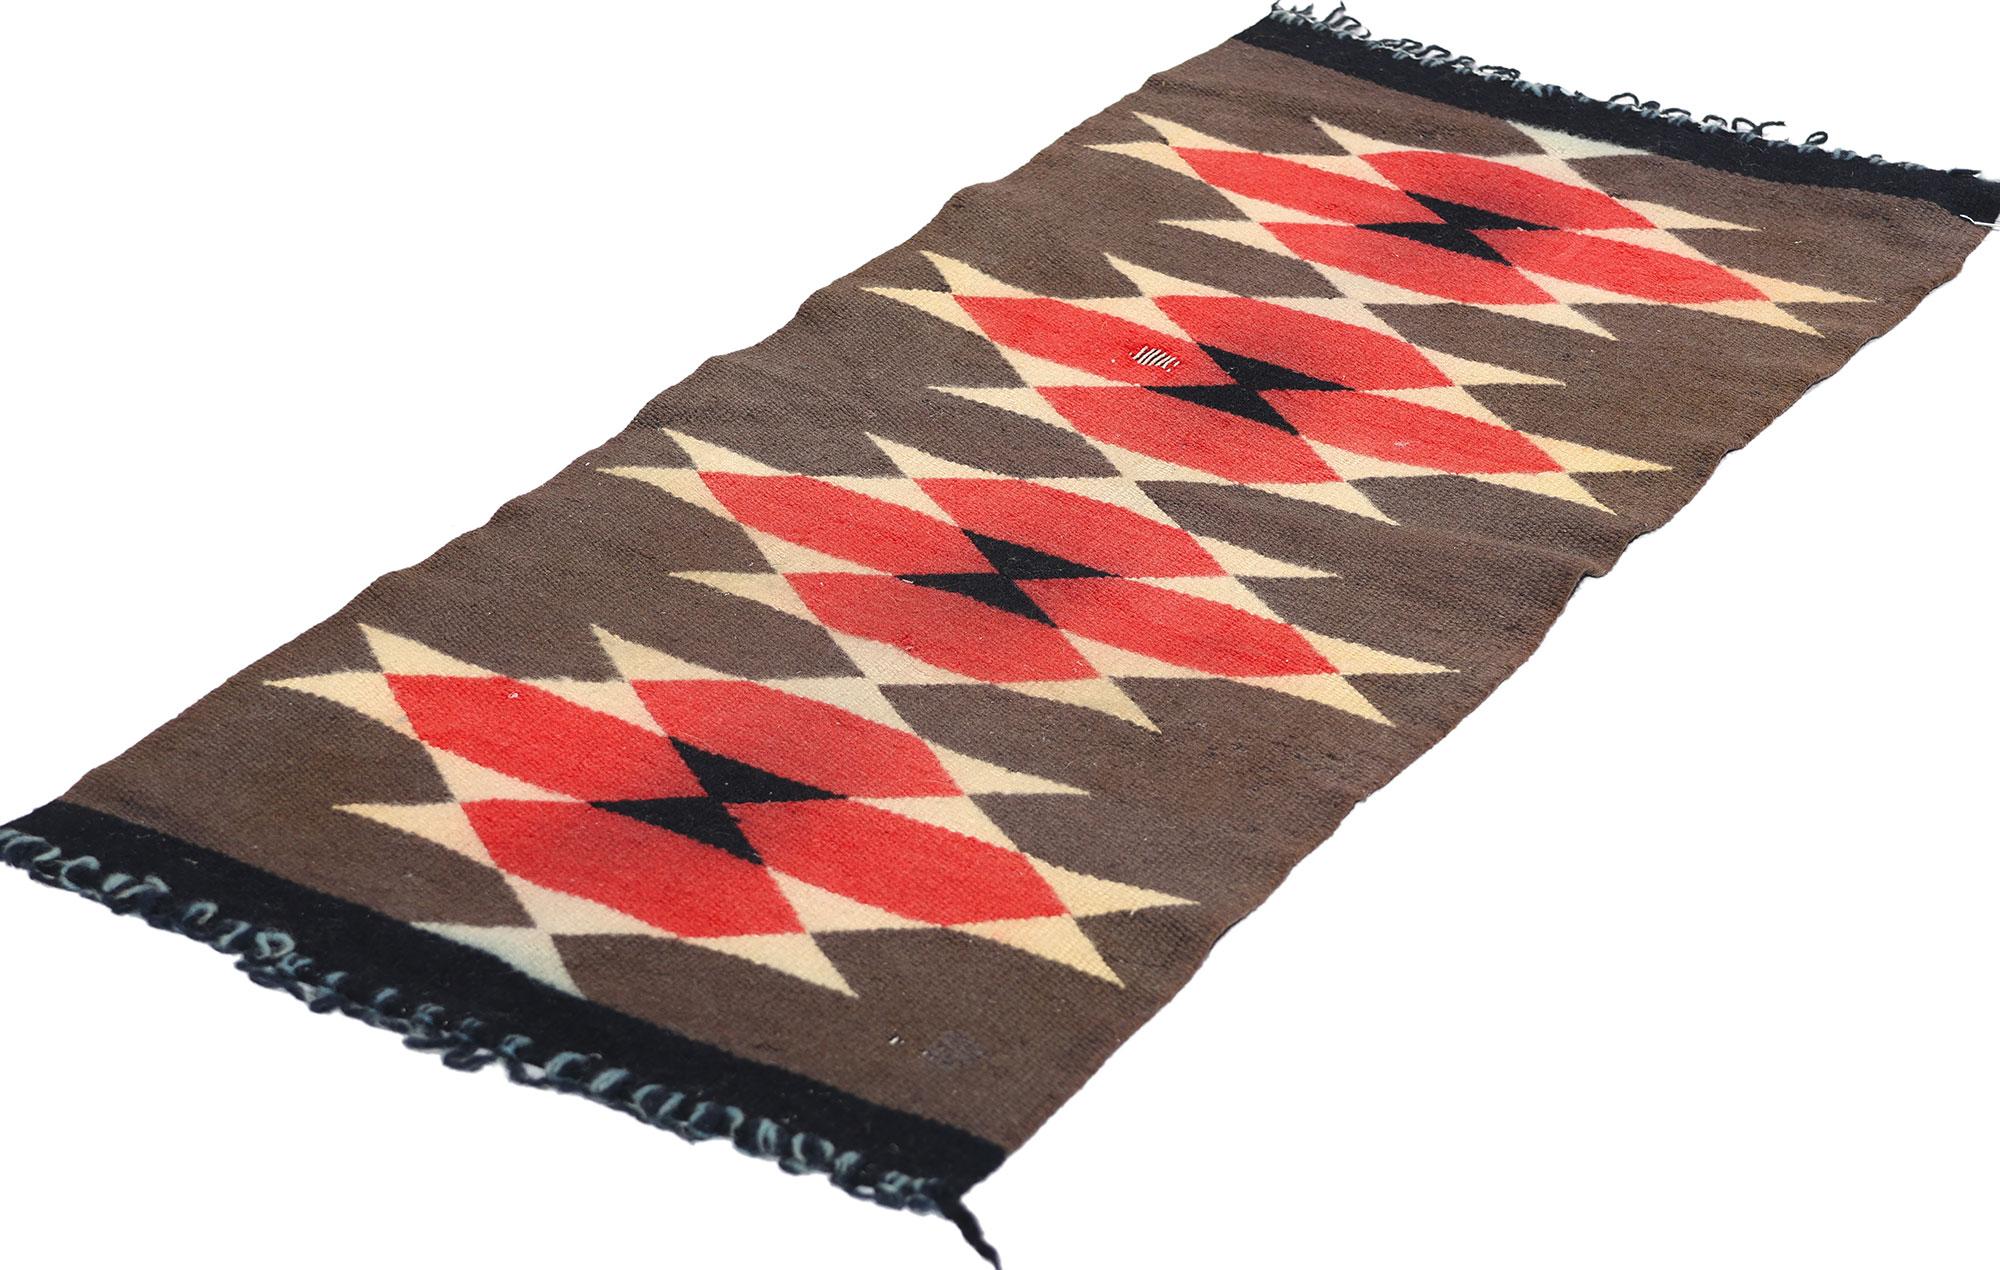 78749 Antique Ganado Navajo Rug,  01'03 x 02'10. Ganado Navajo rugs are handwoven textiles originating from the Ganado region in northeastern Arizona, crafted by Navajo artisans primarily using locally sourced wool from Navajo-Churro sheep. These